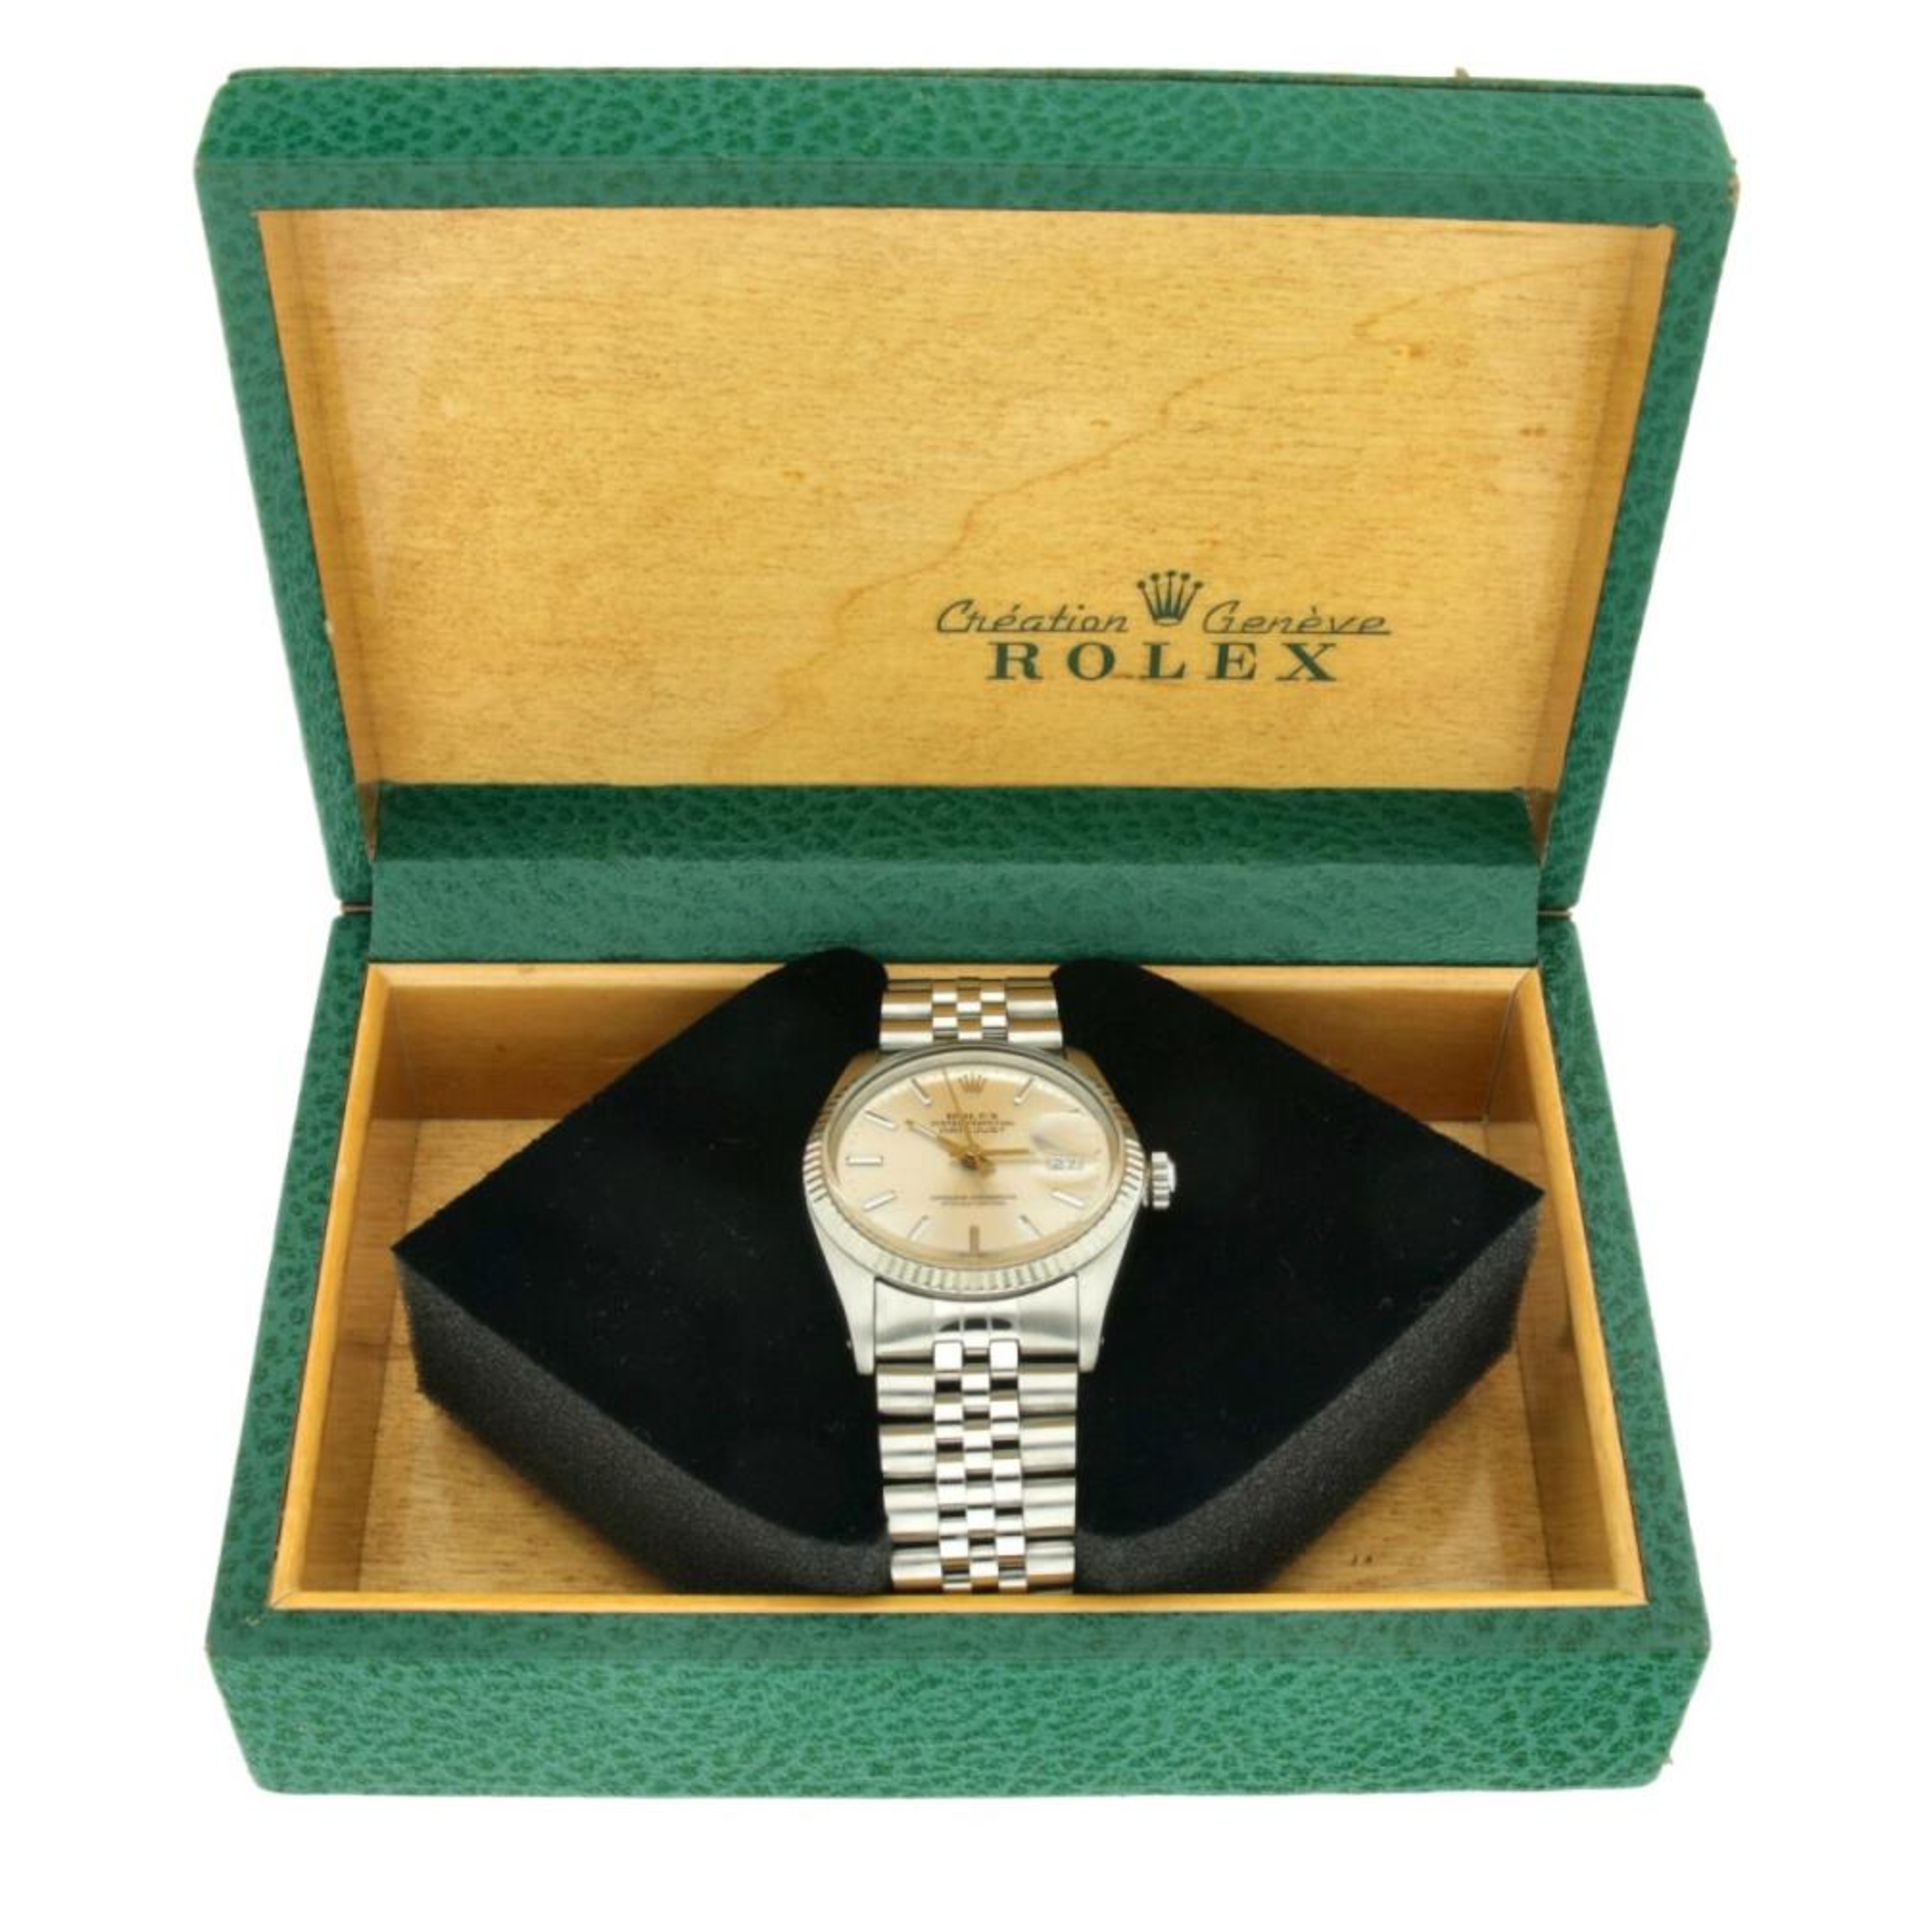 Rolex Datejust 16014 - Men's watch - apprx. 1988. - Image 6 of 6